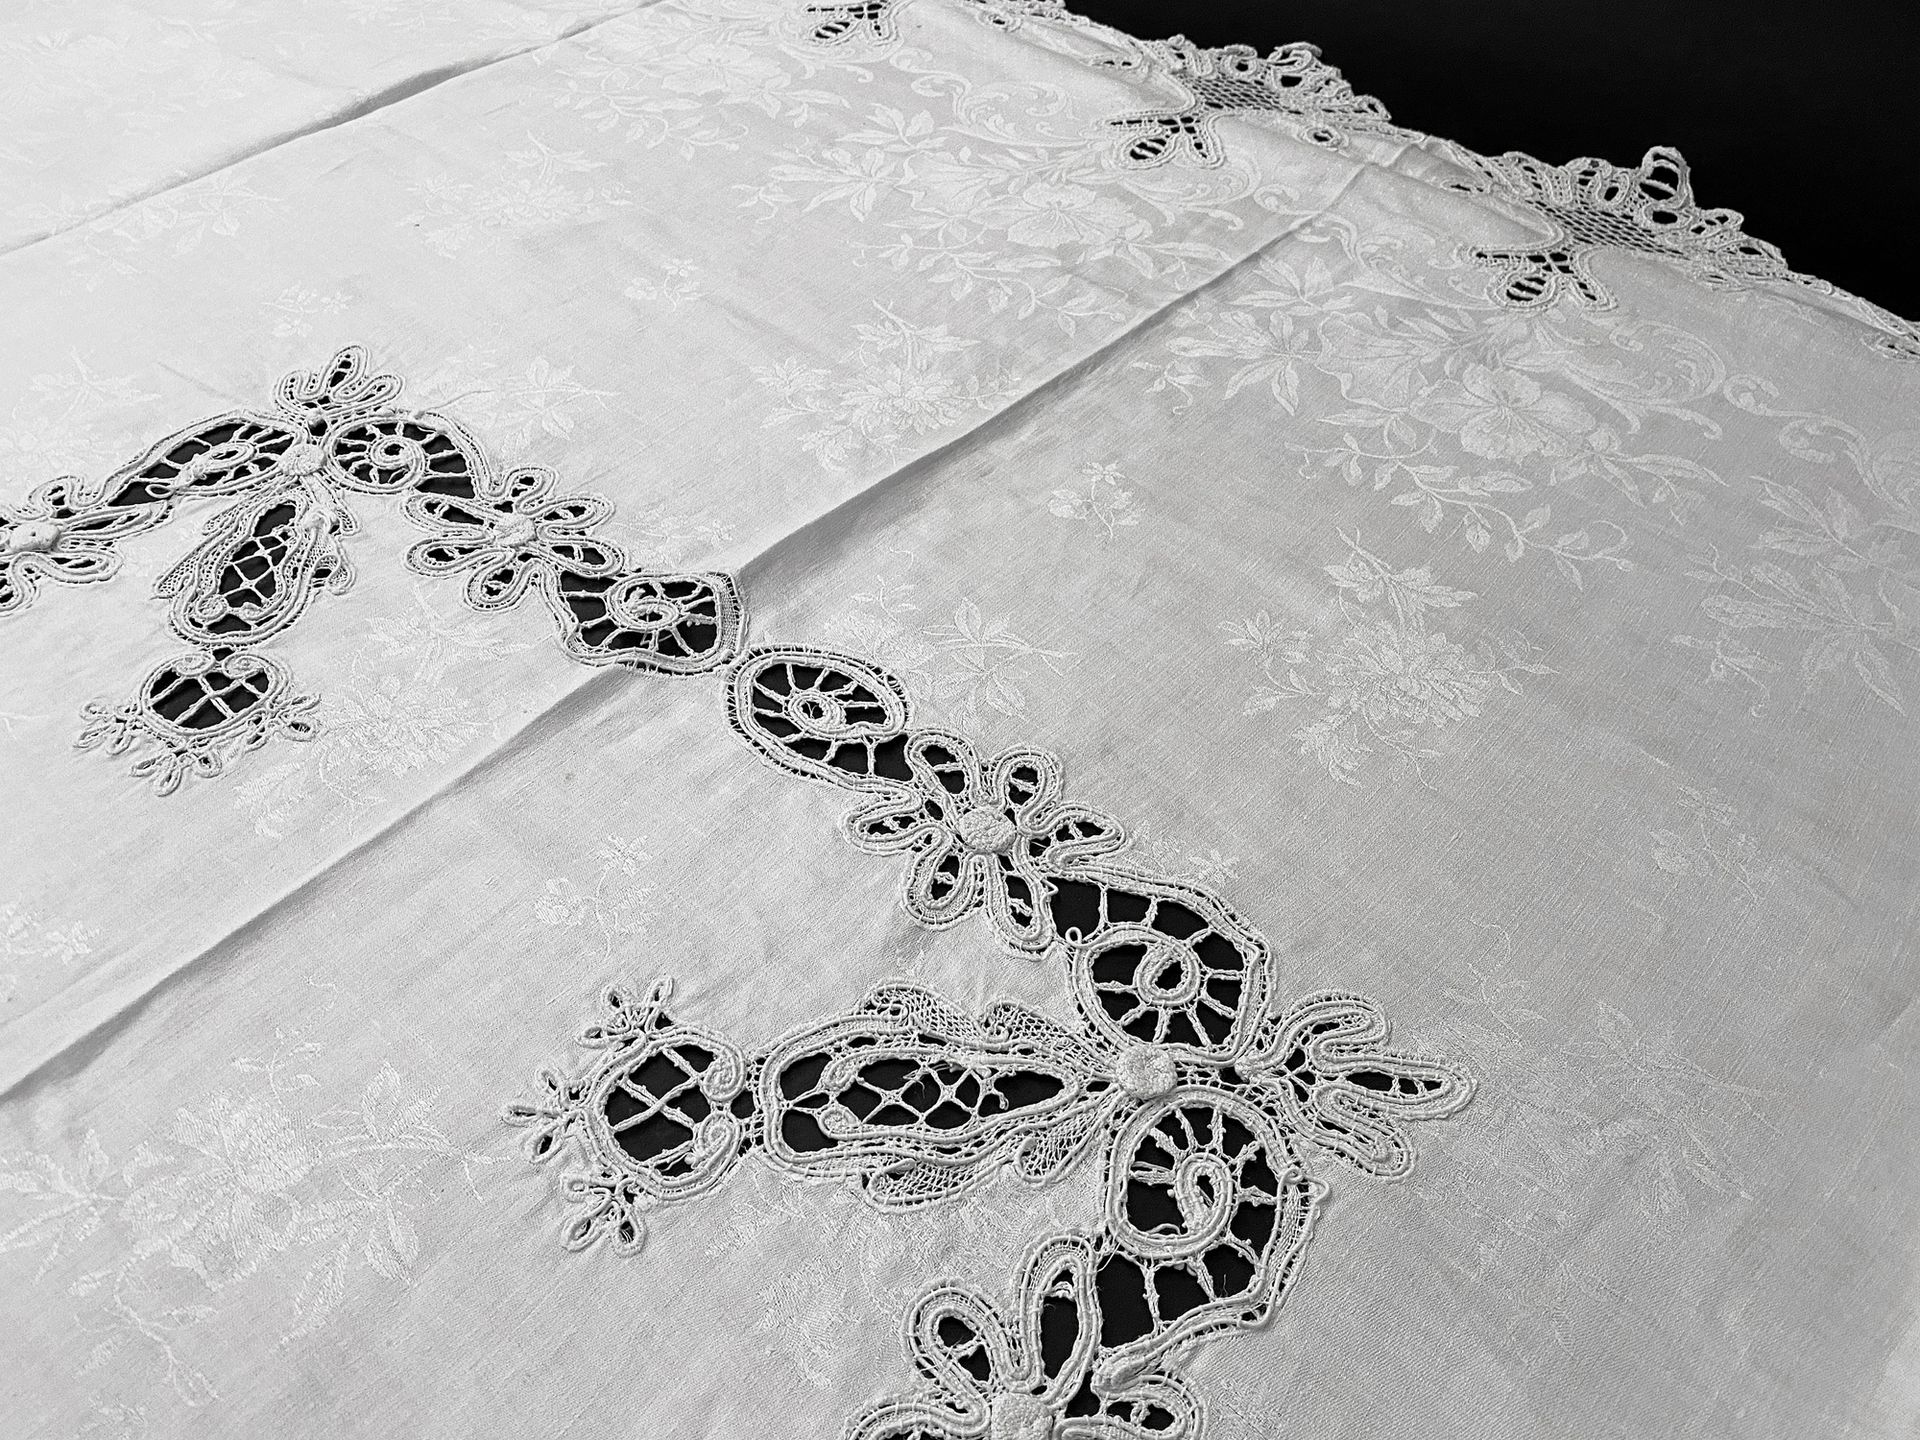 Null 大马士革和蕾丝桌布，20世纪上半叶。
大马士革面料，有波浪纹和花朵装饰，边框用Mirecourt类型的波纹花边包边，桌布上镶嵌着同样的花边。
尺寸：3&hellip;